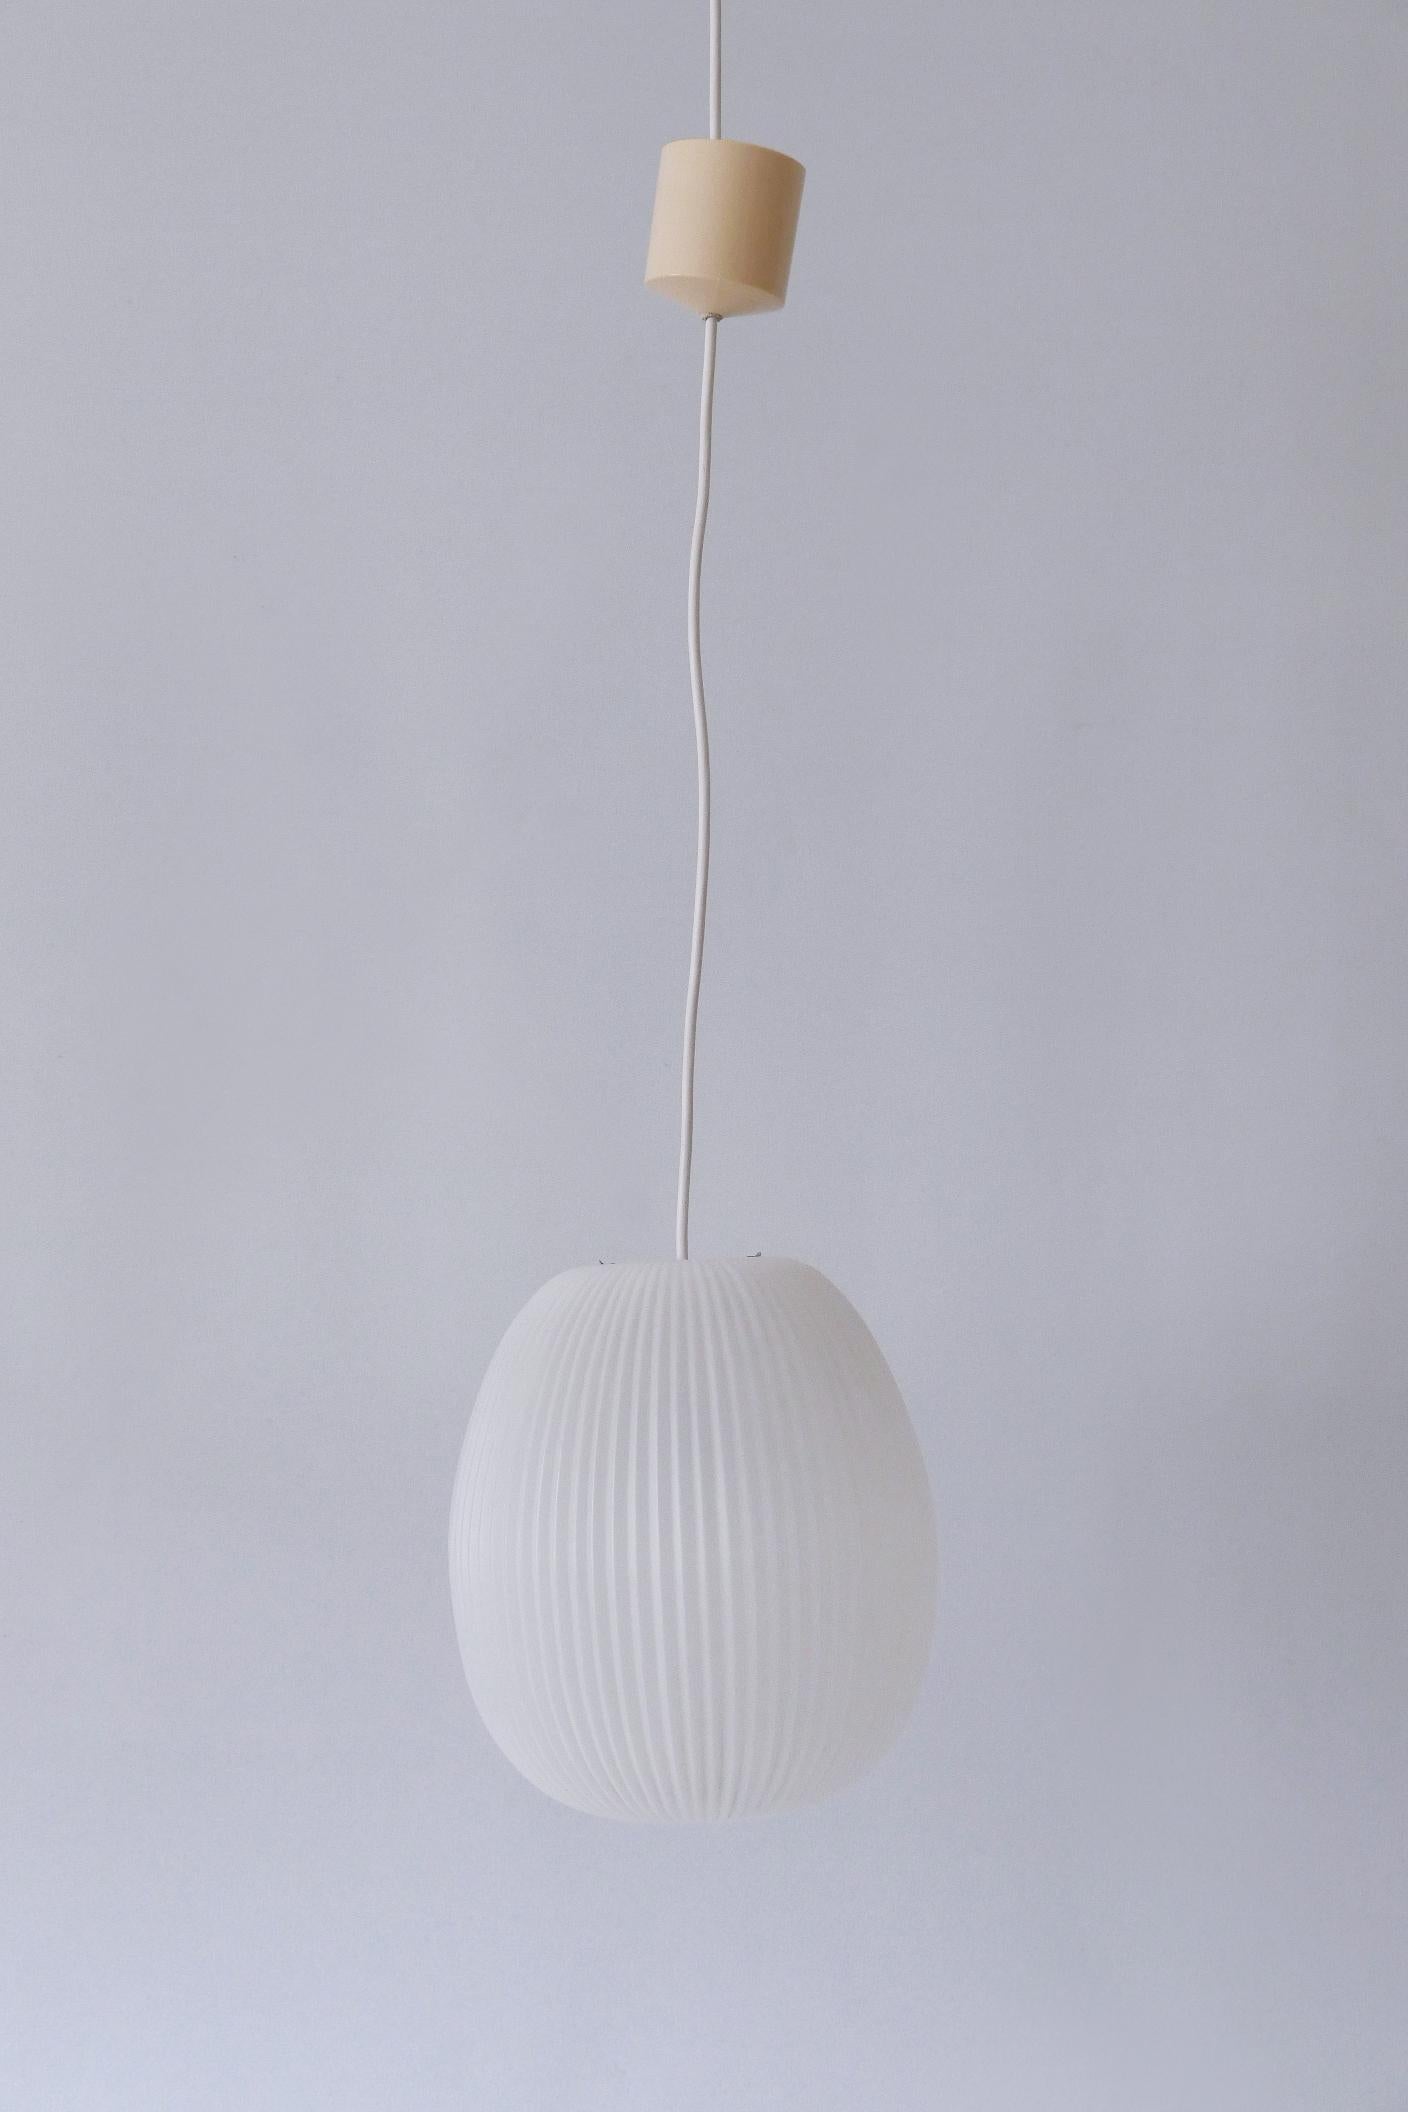 German Lovely Mid-Century Modern Pendant Lamp by Aloys F. Gangkofner für Erco 1960s For Sale